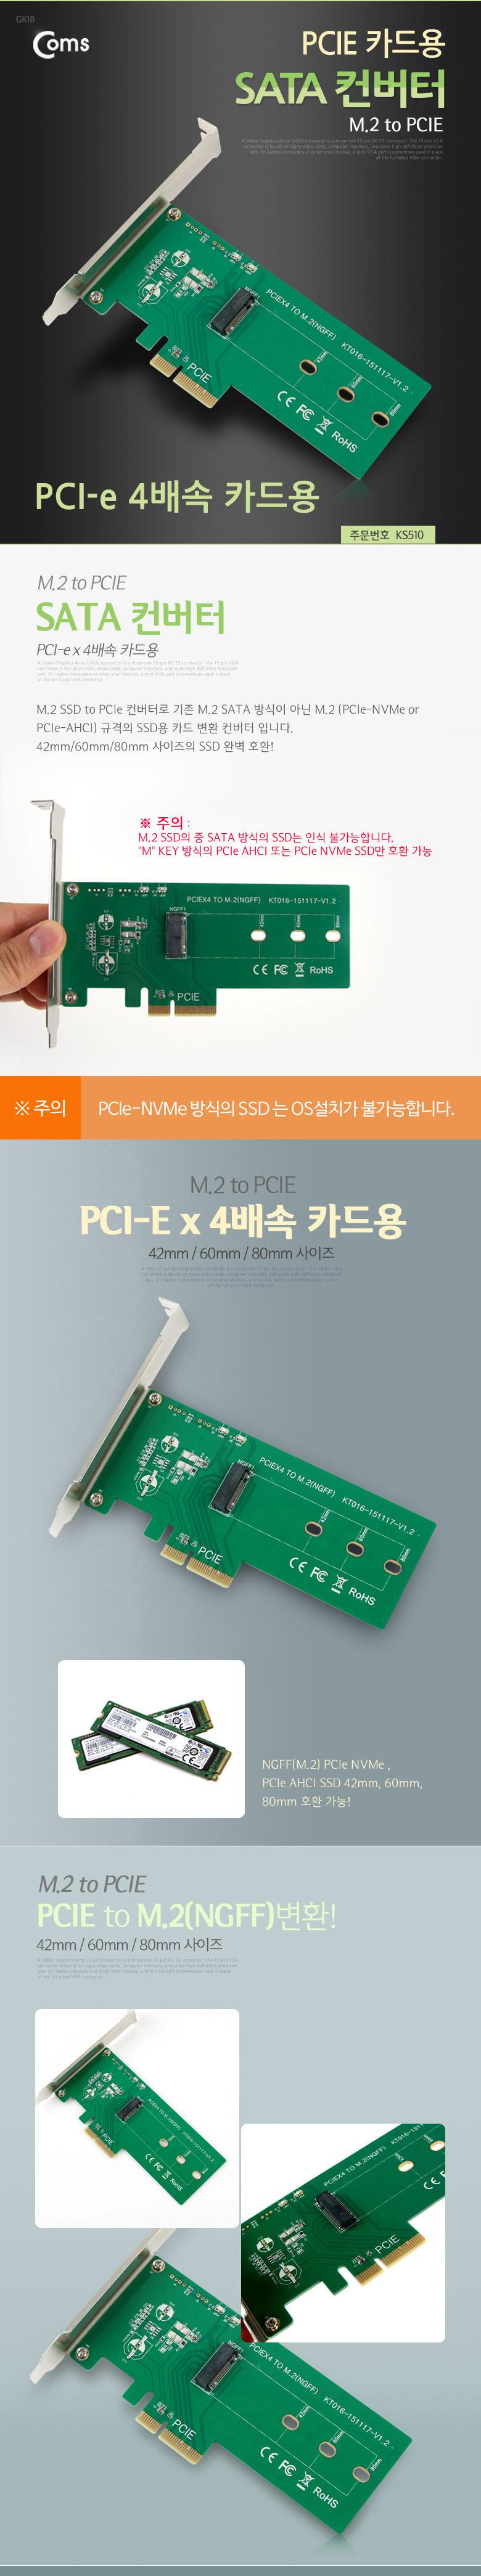 Coms PCI Express ȯ  M.2 NGFF SSD Key M + PCI-E 4x PC  ȯ ī  SATA Ÿ SATA ESATA SAS SATA ϵũ ǻͺǰ